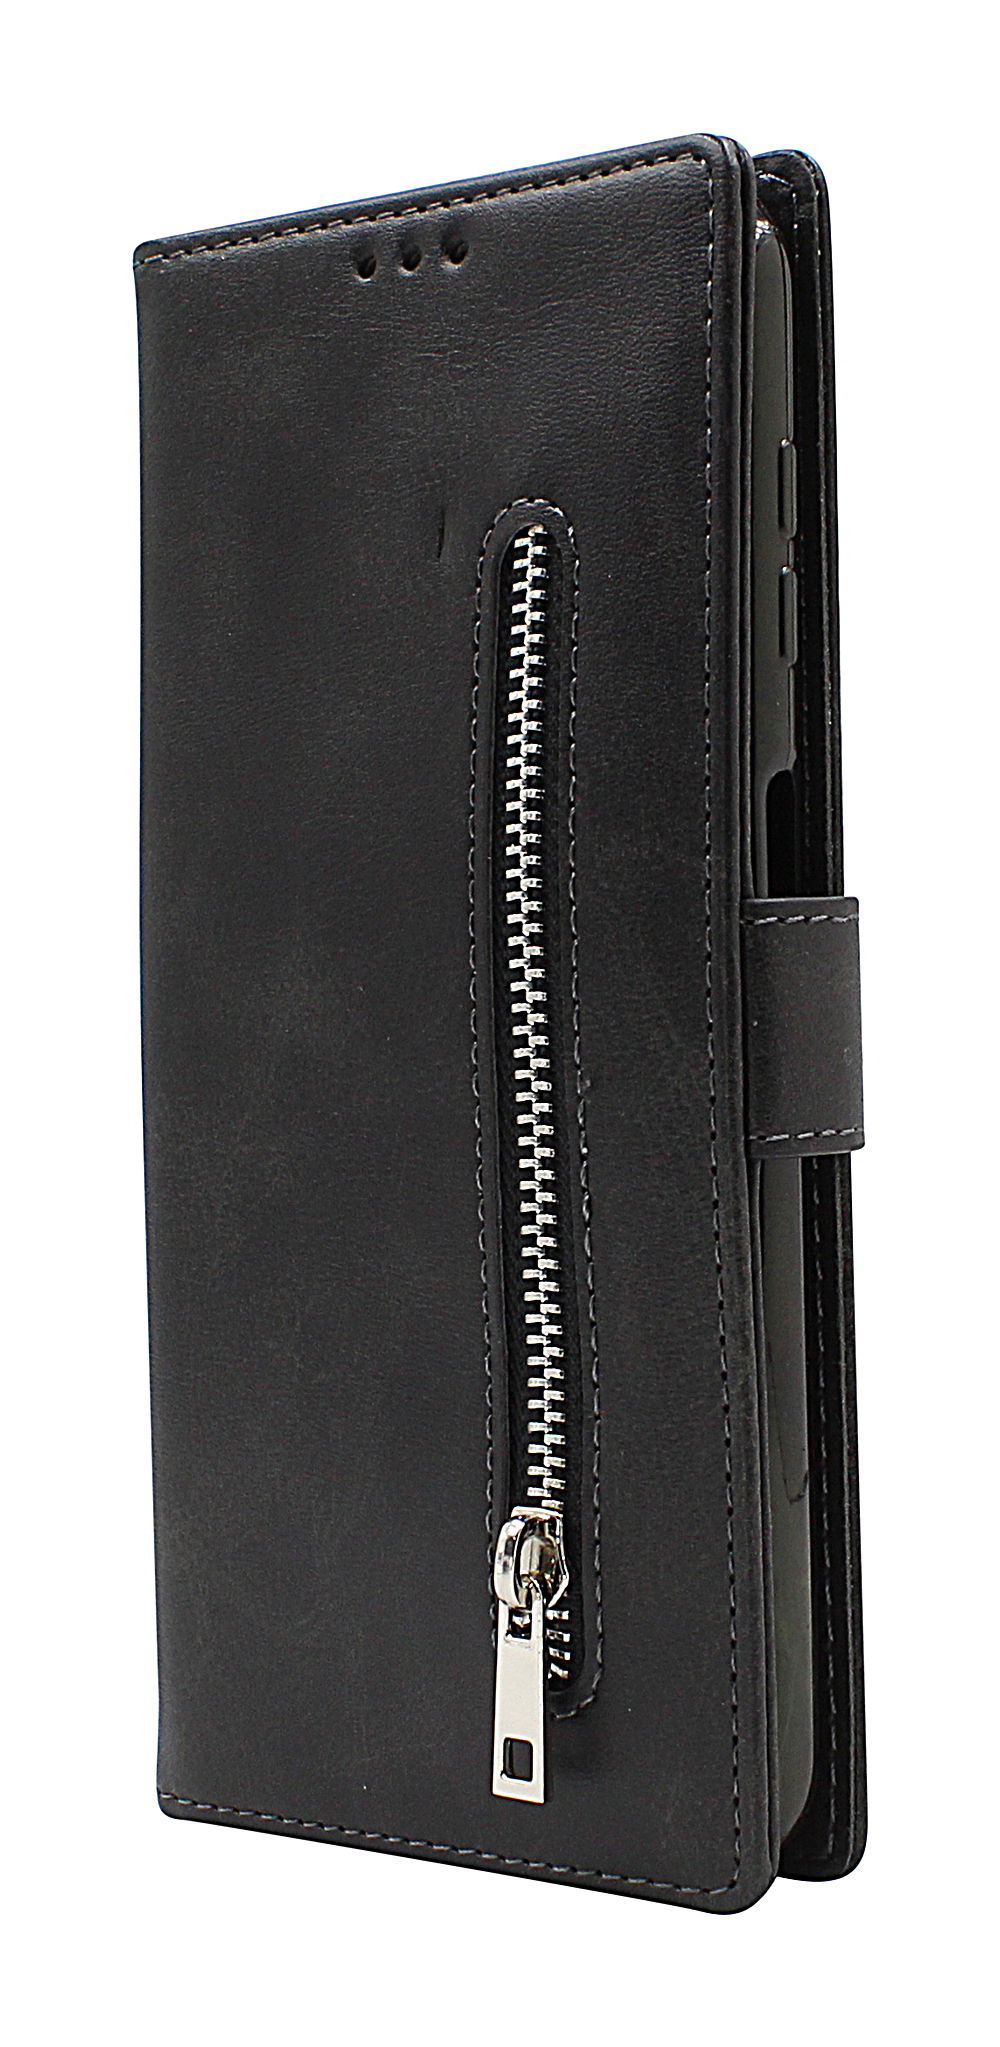 Zipper Standcase Wallet Samsung Galaxy A13 (A135F/DS)